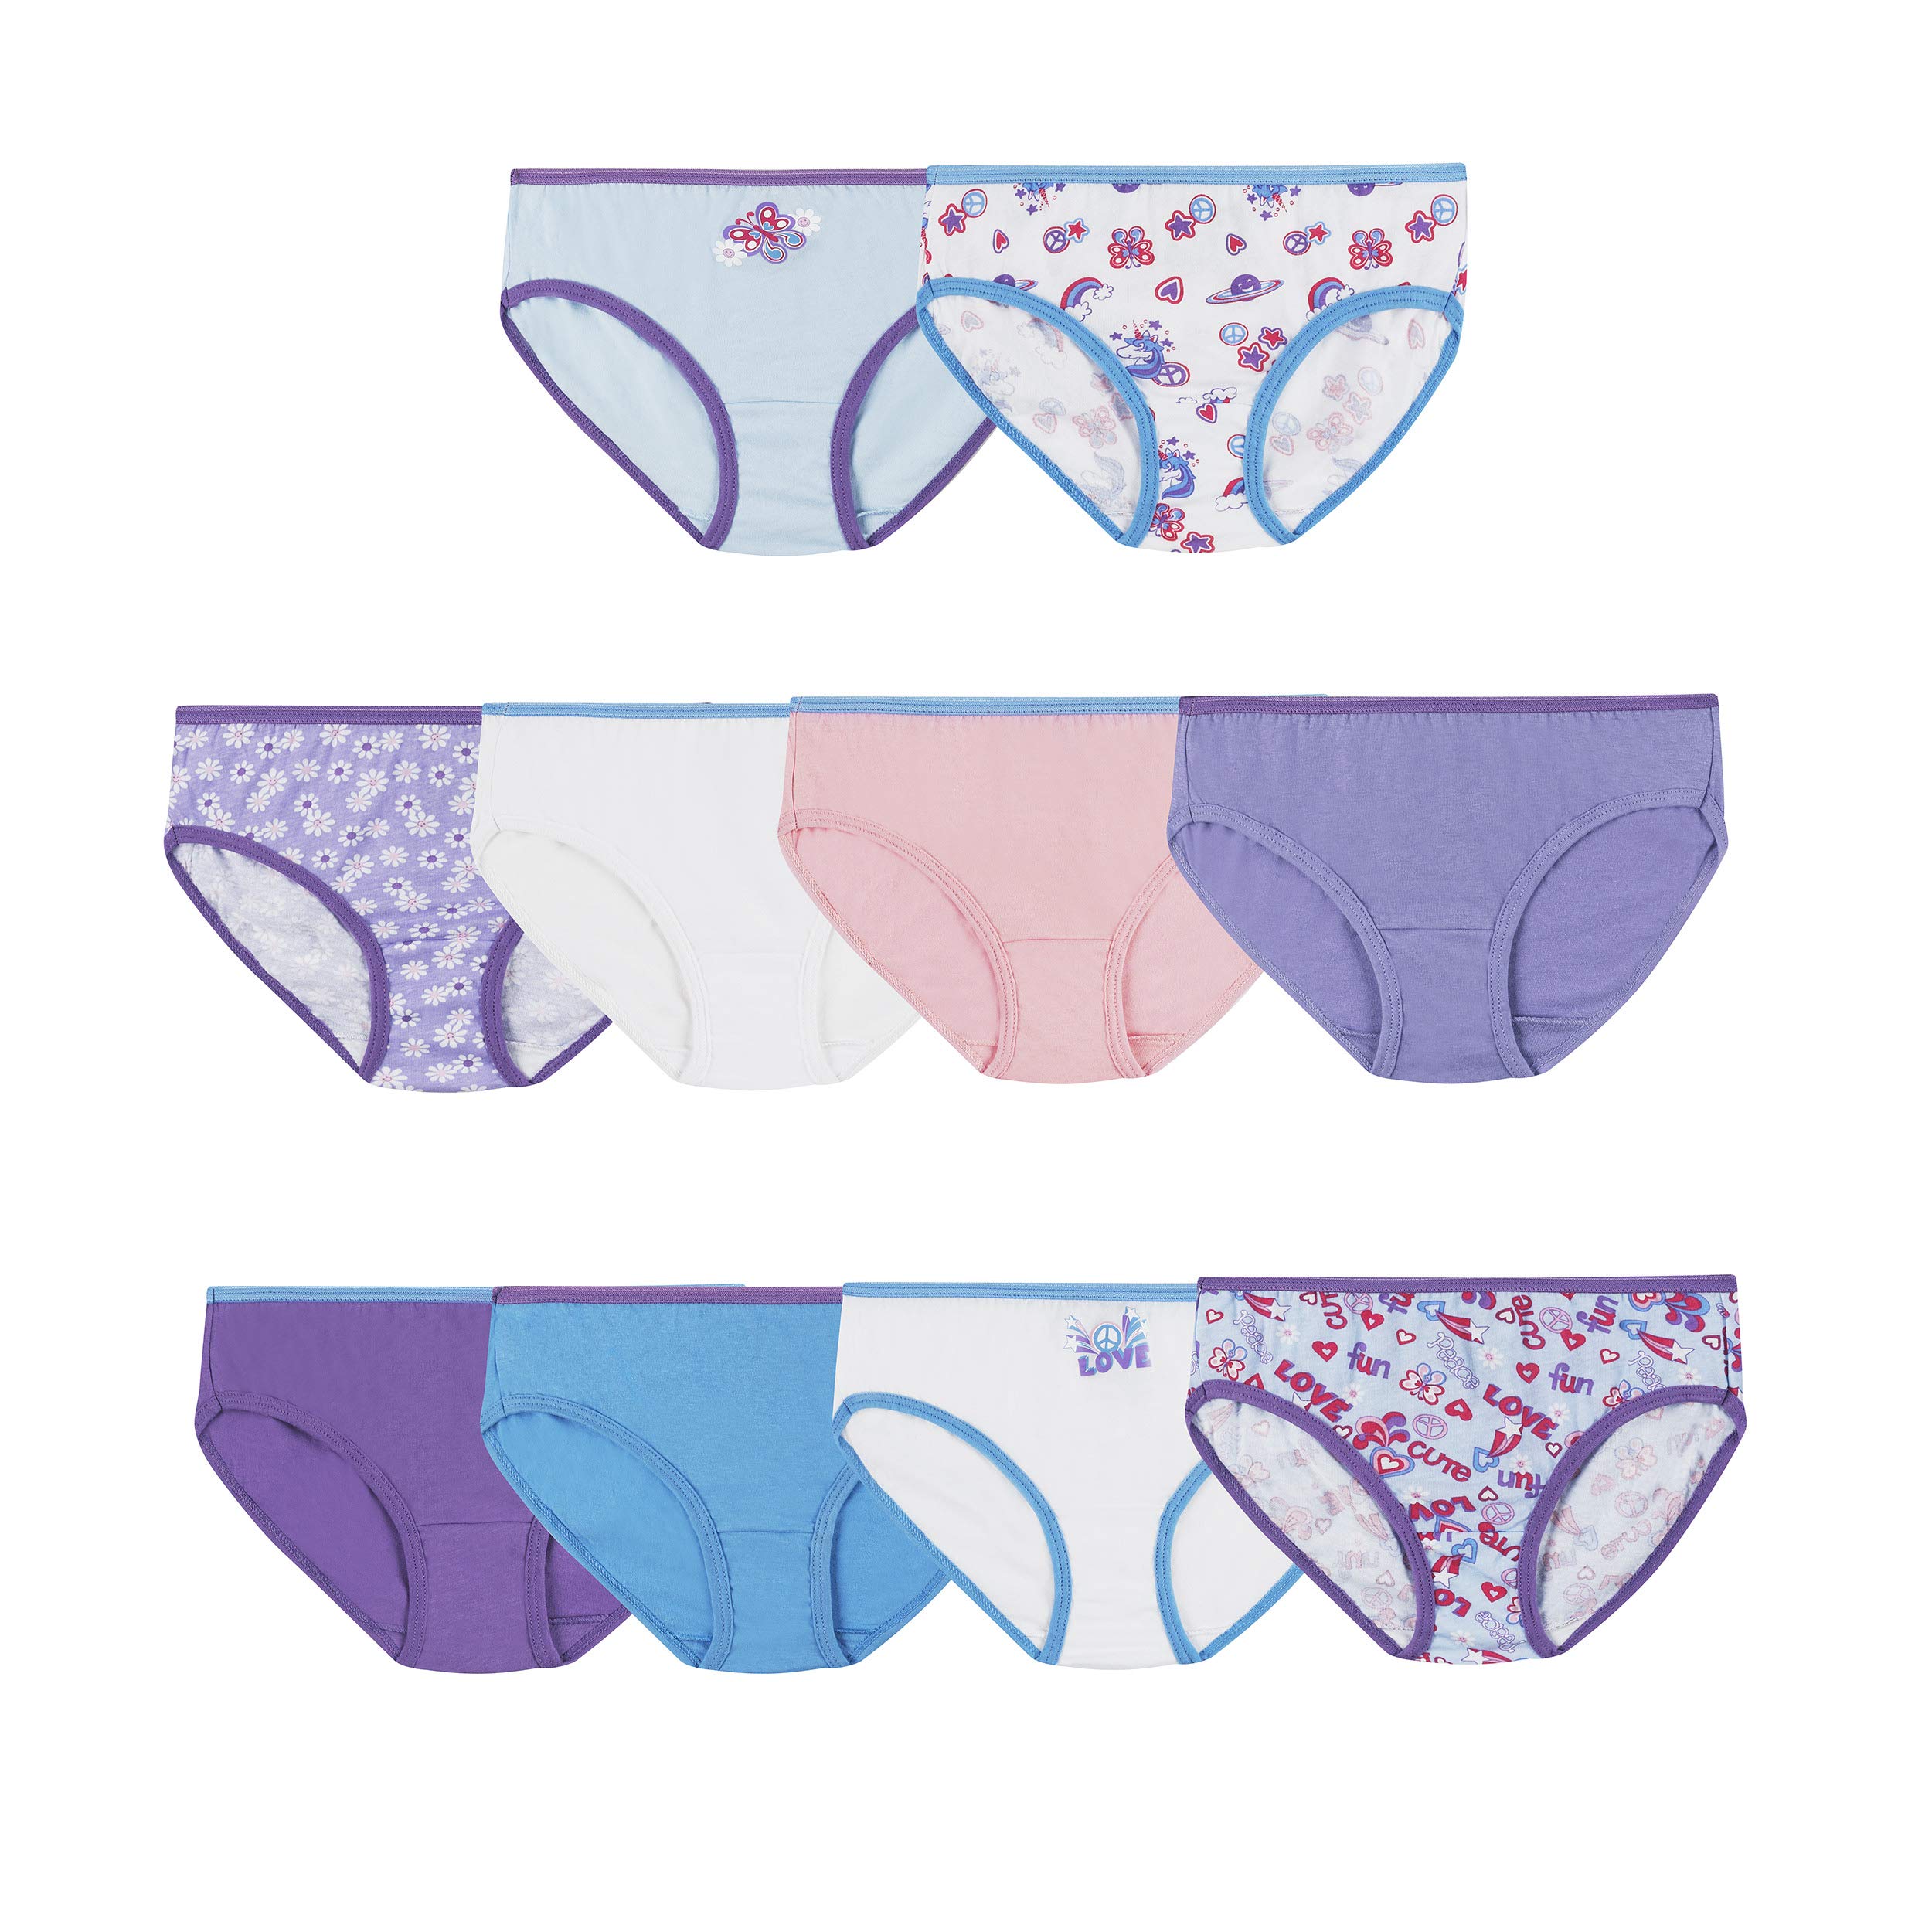 Hanes Girls’ Underwear, Low Rise Briefs 100% Cotton Underwear, Assorted Colors & Prints, Multipack